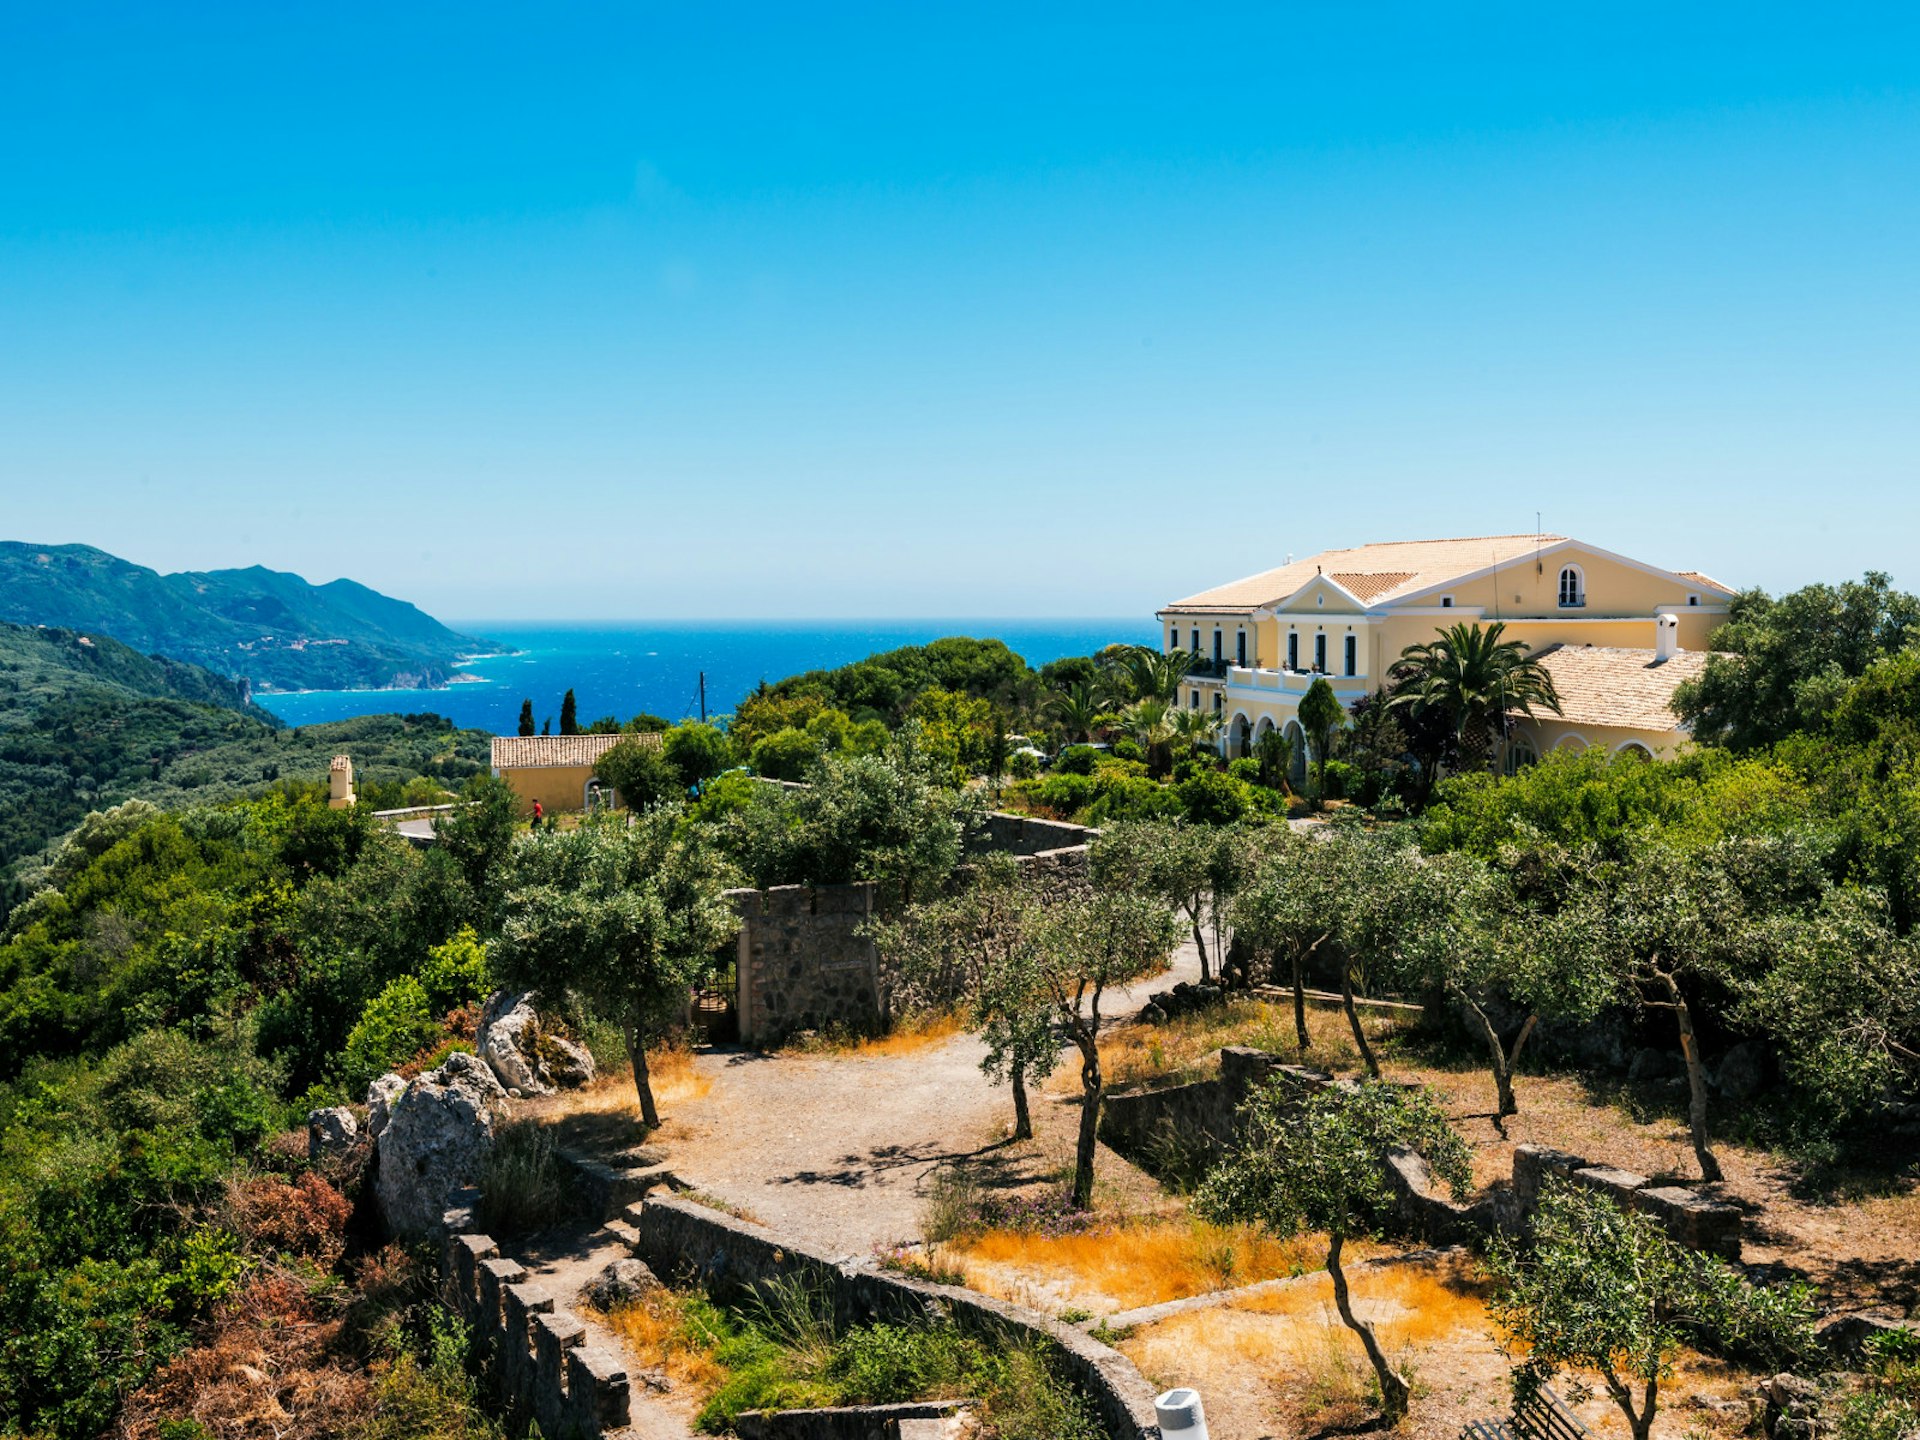 Olive groves dot the landscape near Kaiser's Throne on the island of Corfu © Elena Pavlovich / Shutterstock